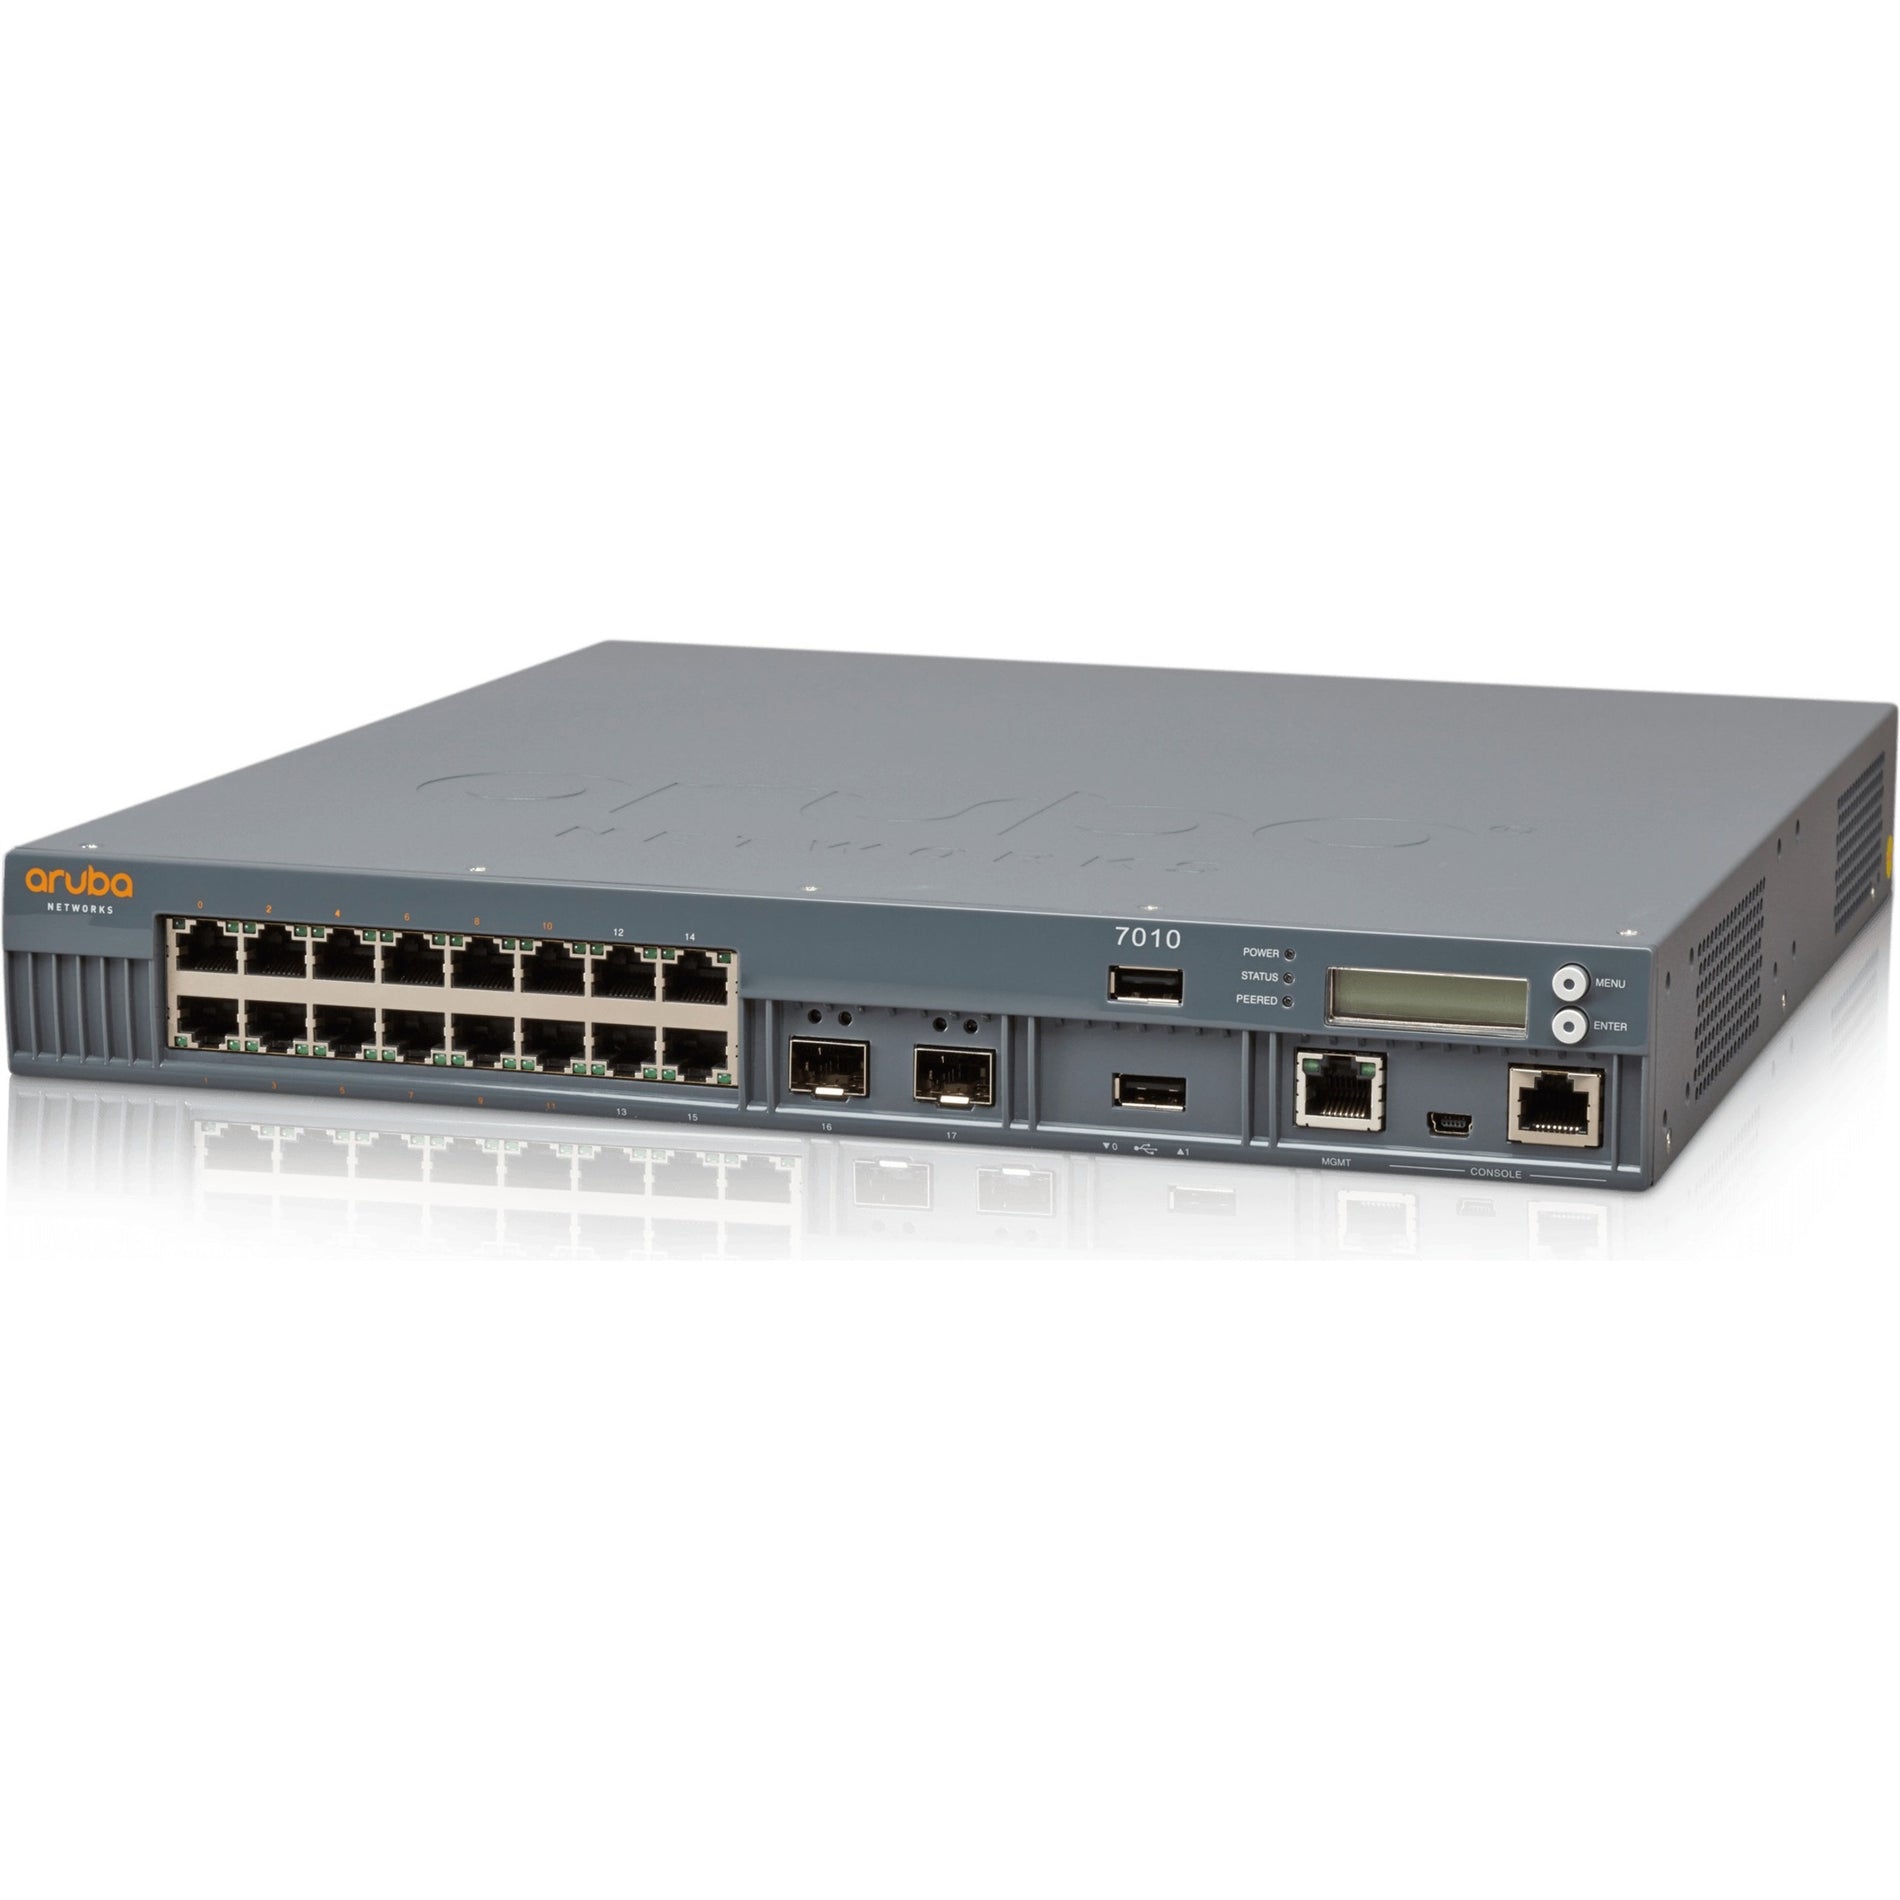 Aruba JW679A 7010 Wireless LAN Controller, Gigabit Ethernet, 16 Network Ports